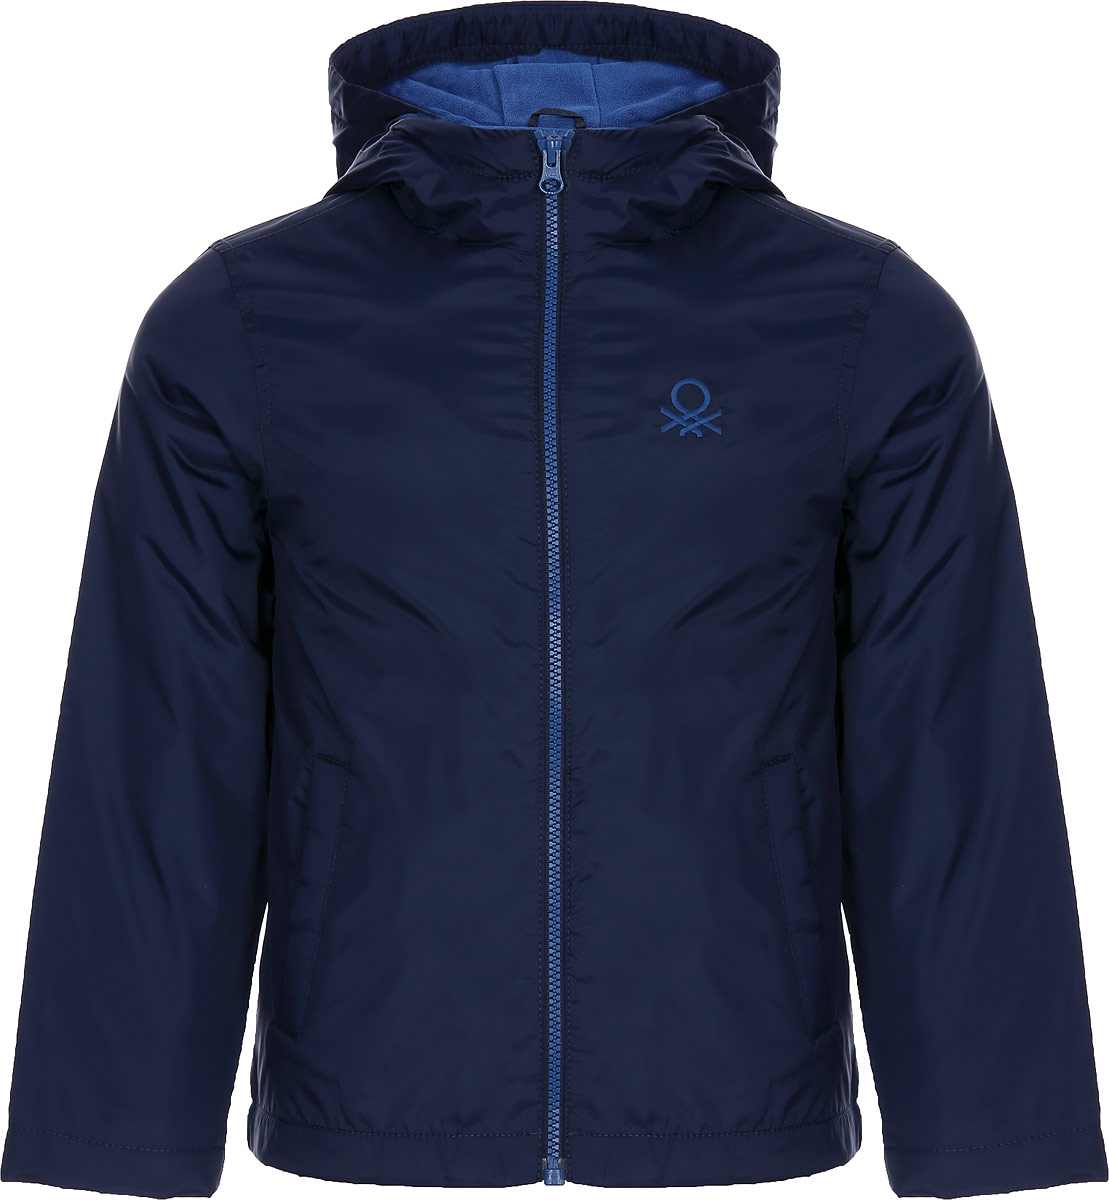 Куртка для мальчика United Colors of Benetton, цвет: синий. 2BL553CM0_13C. Размер 130